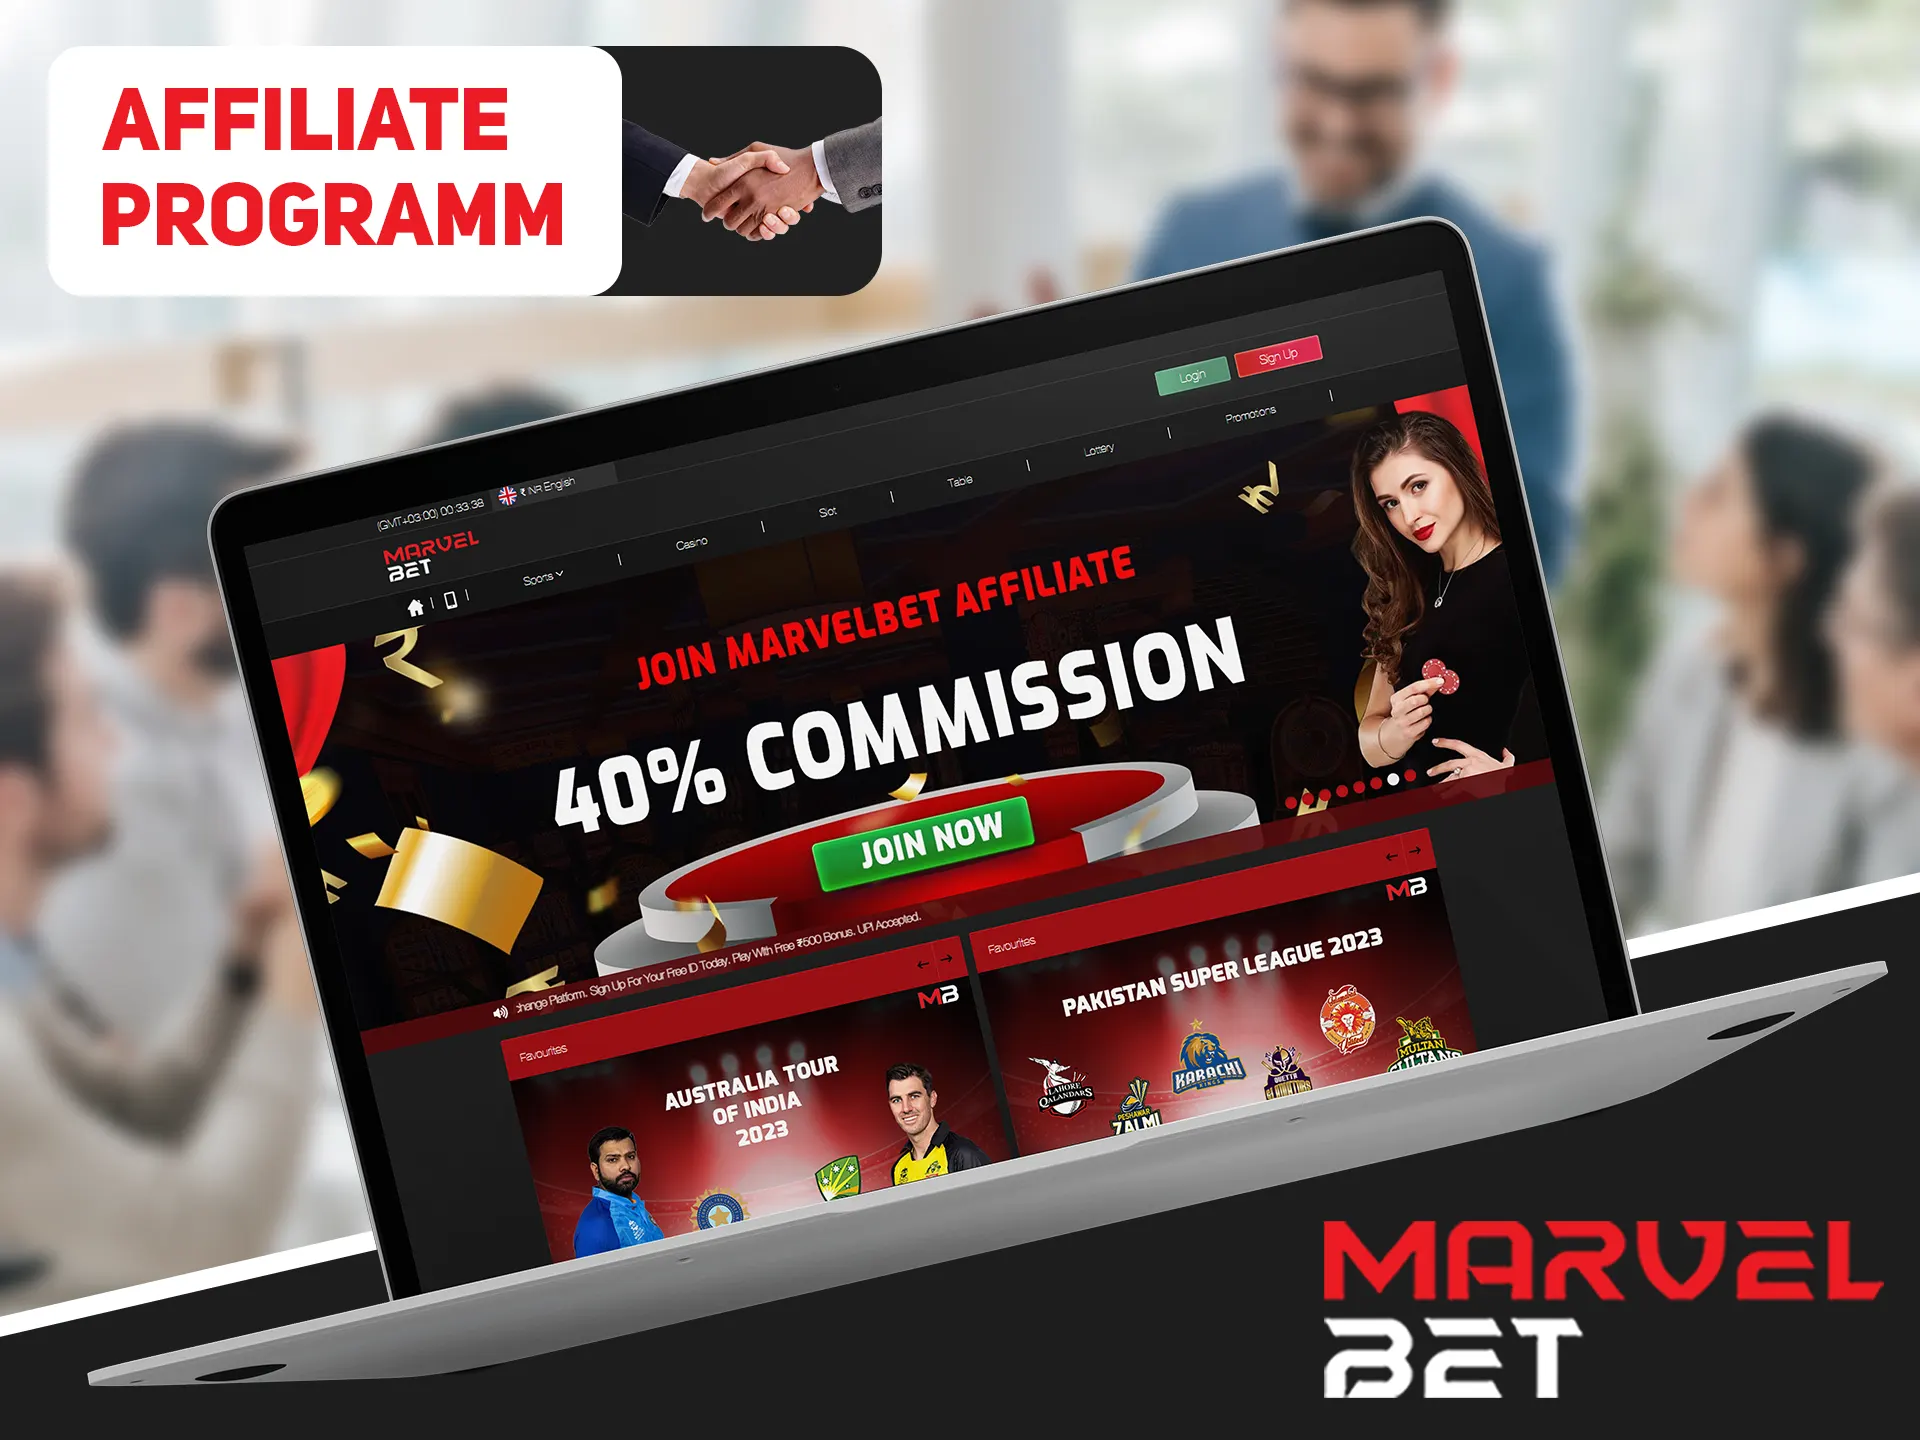 Invite your partners into Marvelbet affiliate programm.